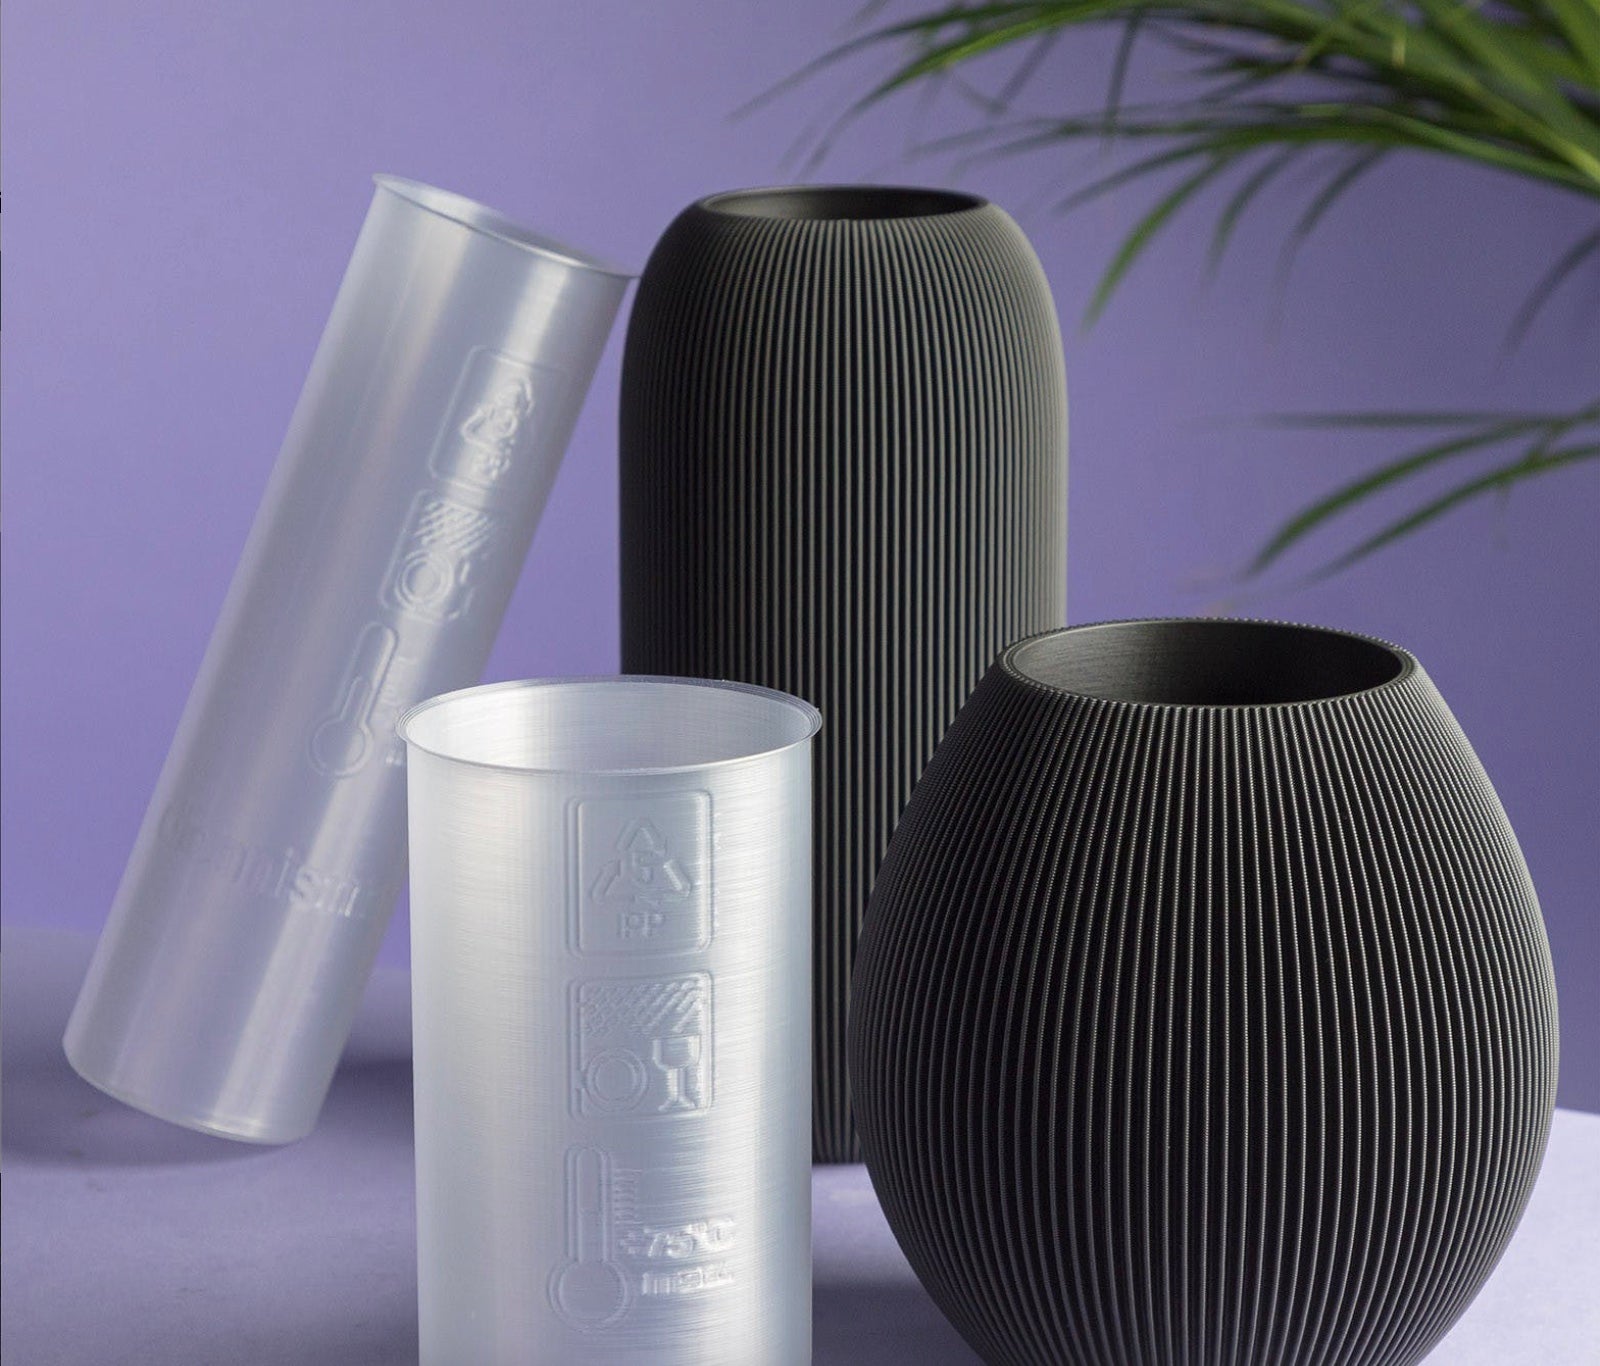 Bottle Minimalist Vase 3D print